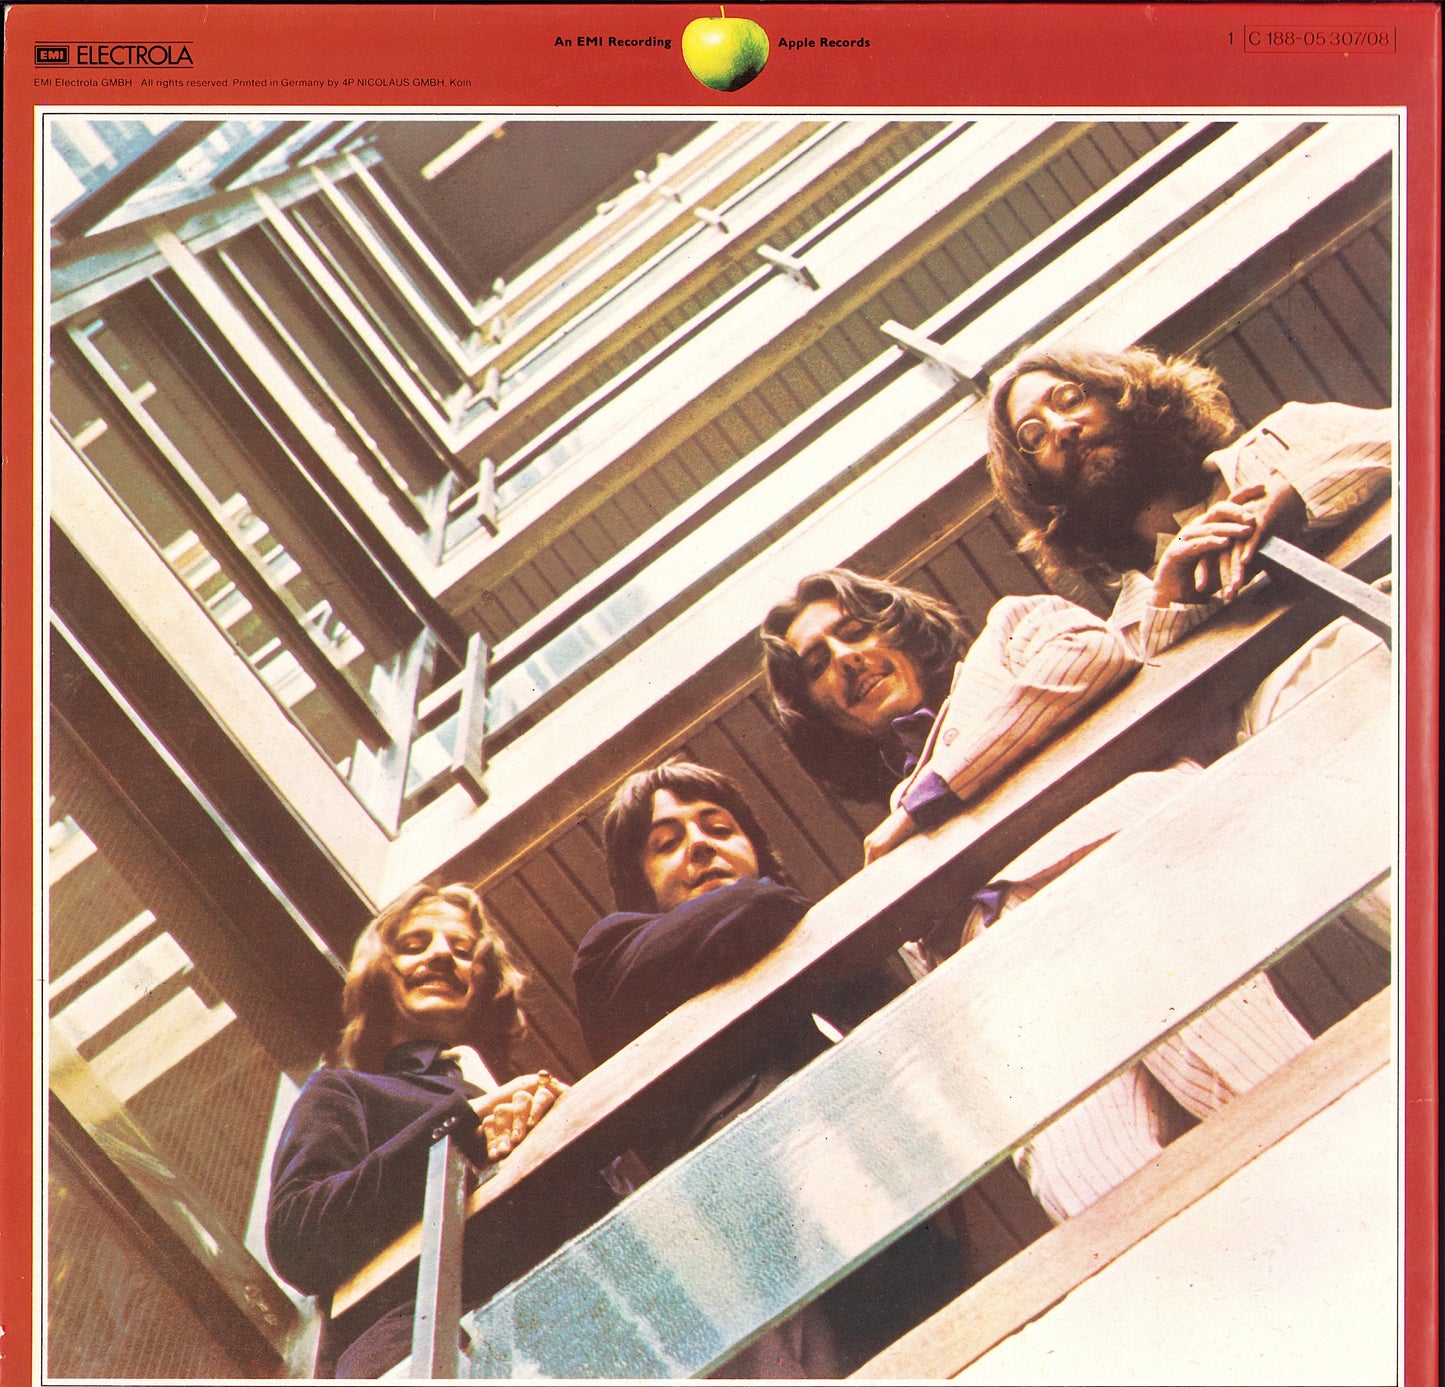 The Beatles - 1962-1966 Vinyl 2LP